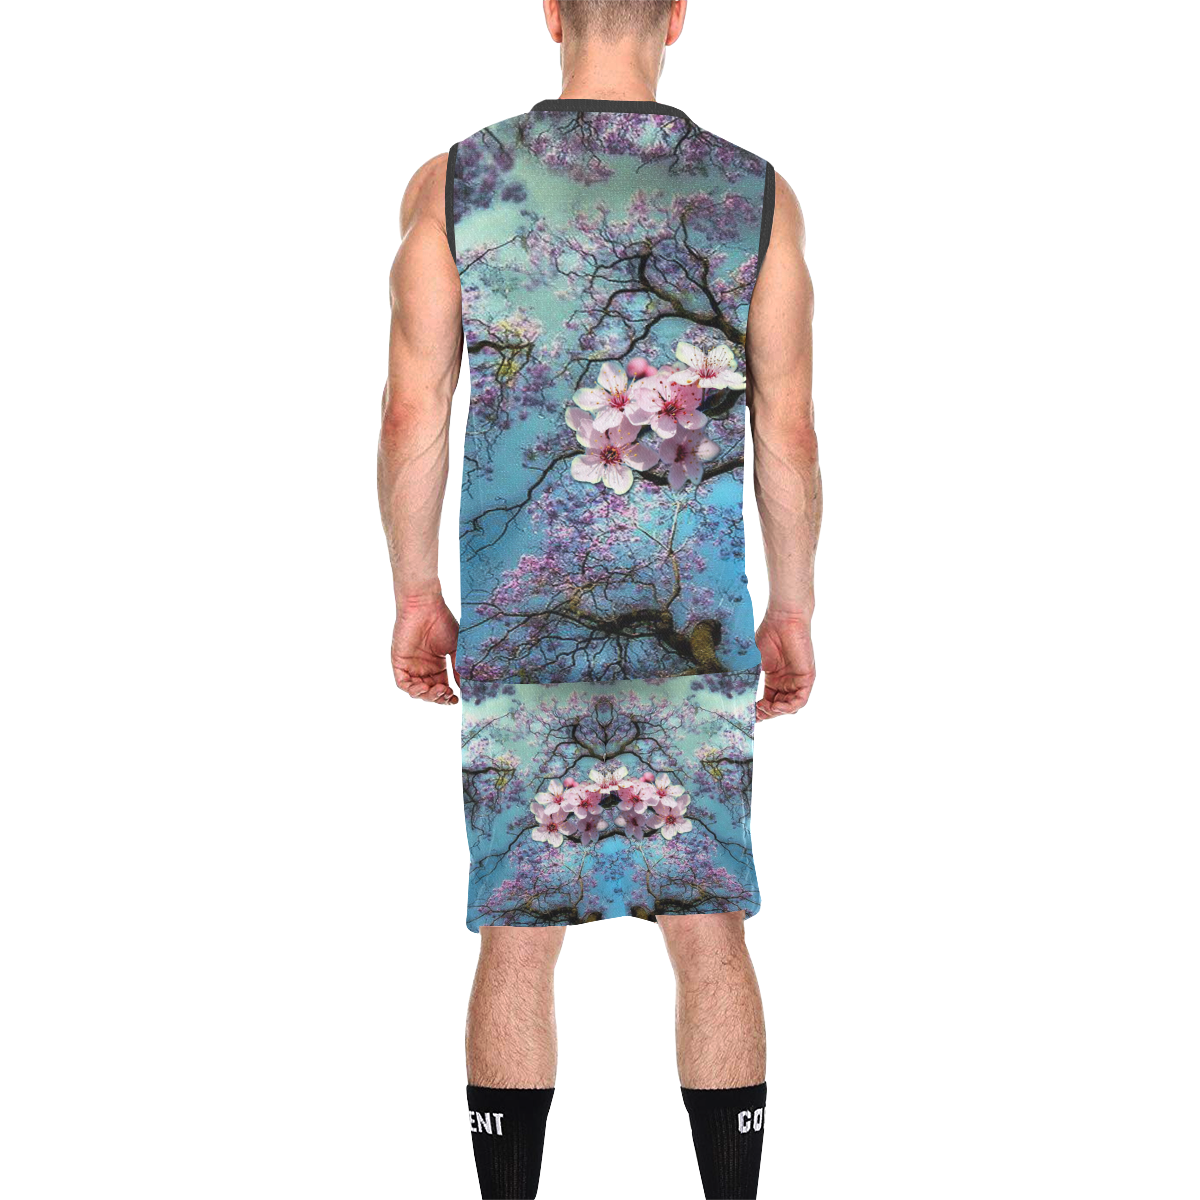 Cherry blossomL All Over Print Basketball Uniform